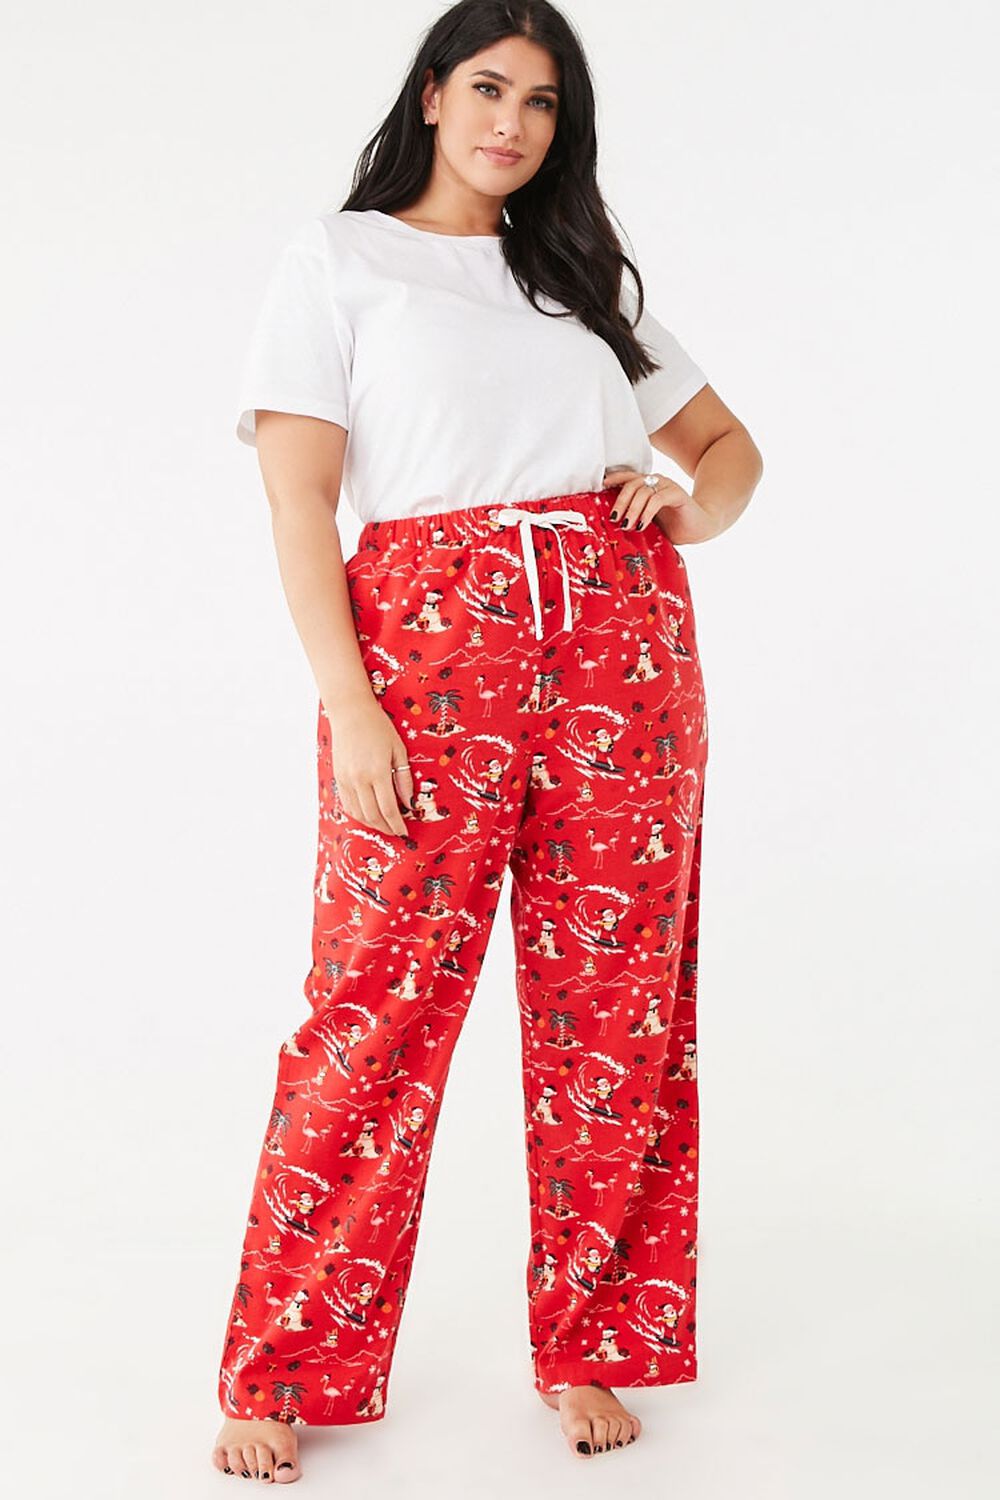 RED/MULTI Plus Size Santa Pajama Pants, image 1